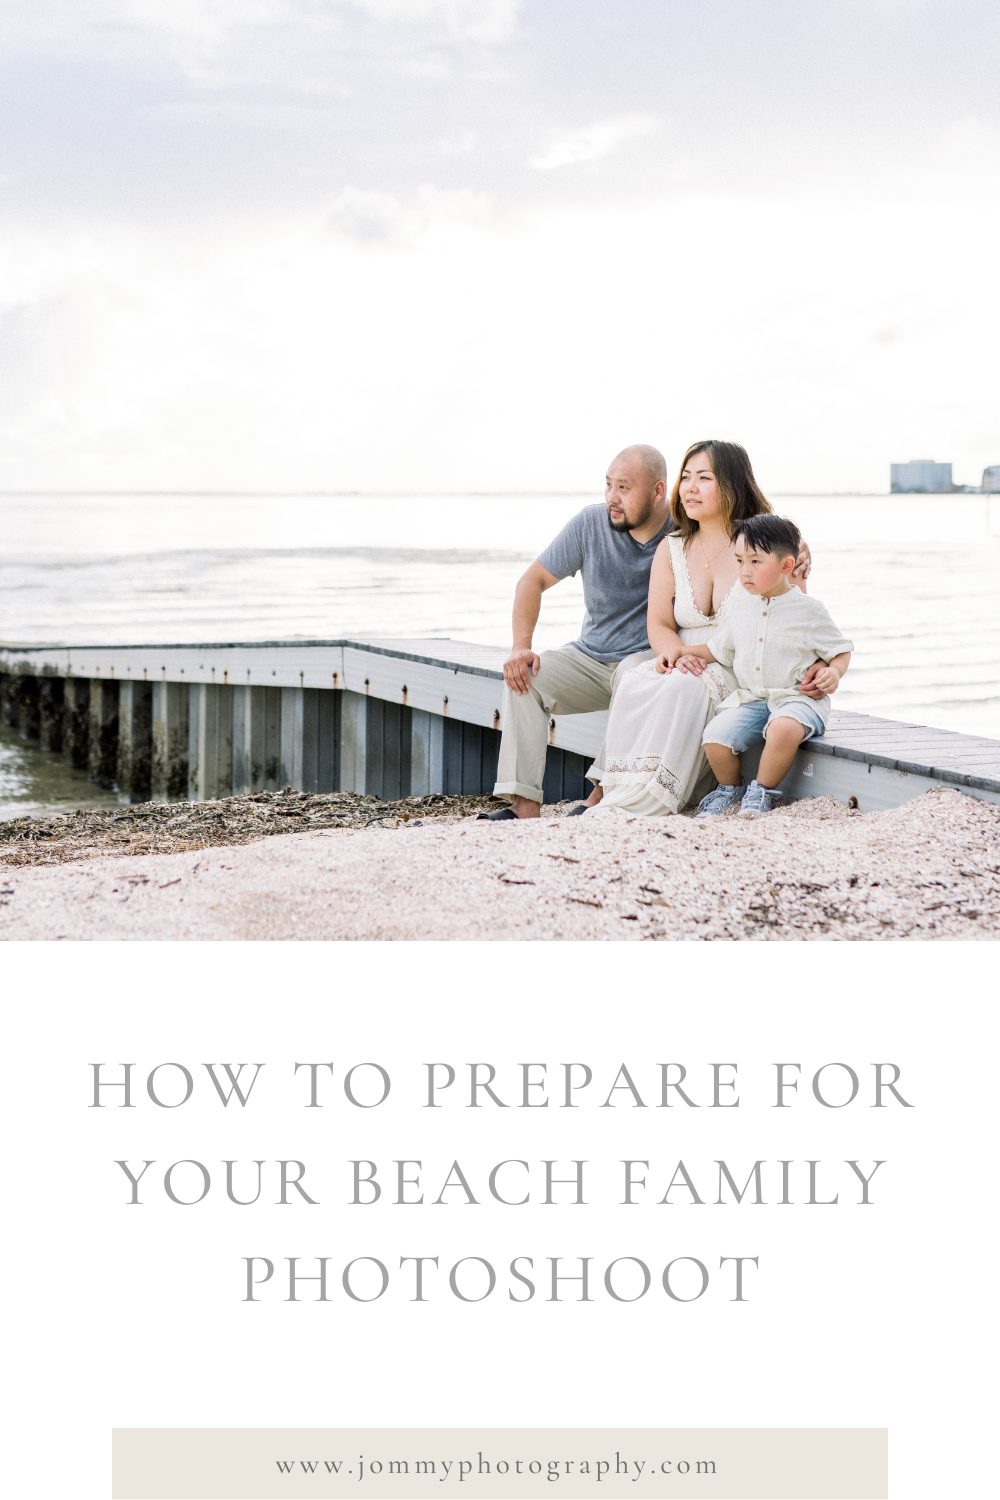 Prepare family for beach photoshoot